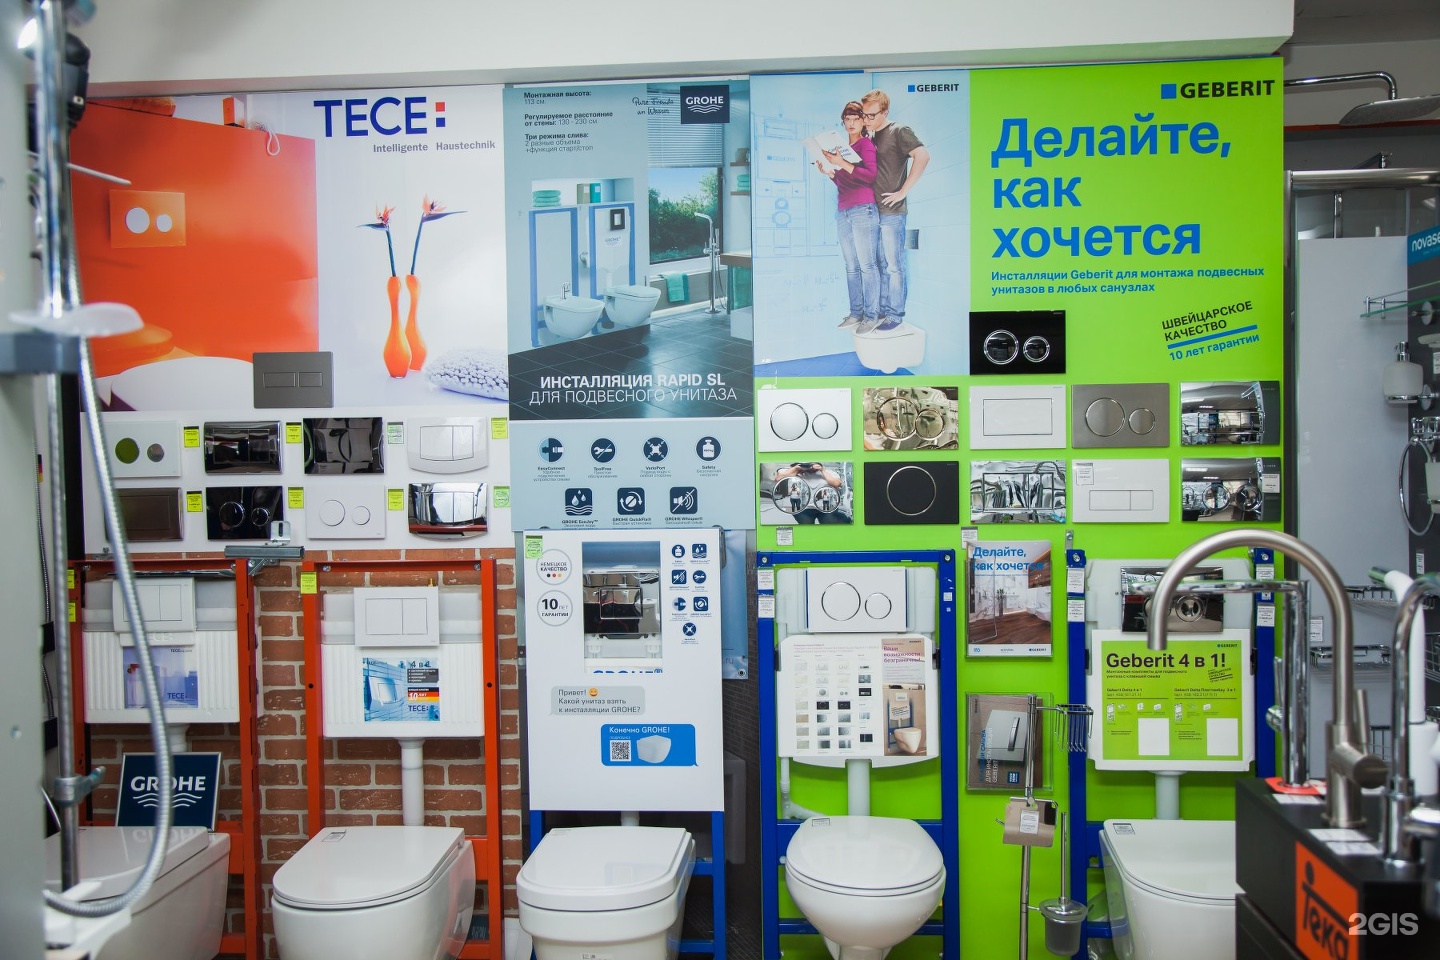 Магазин сантехники волгодонск